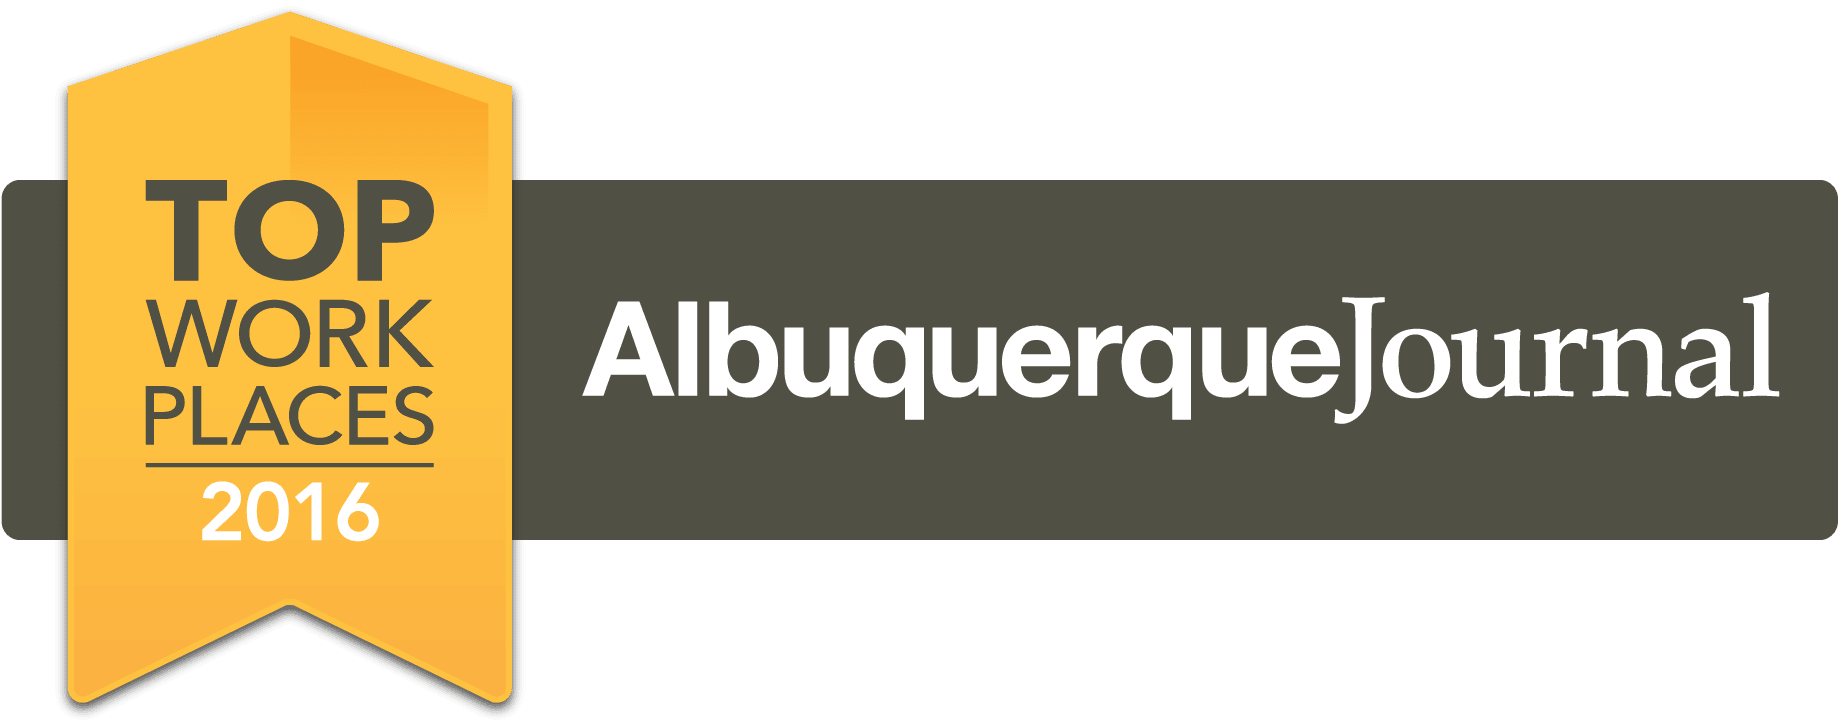 Albuquerque Journal Top Work Places 2016 Winner